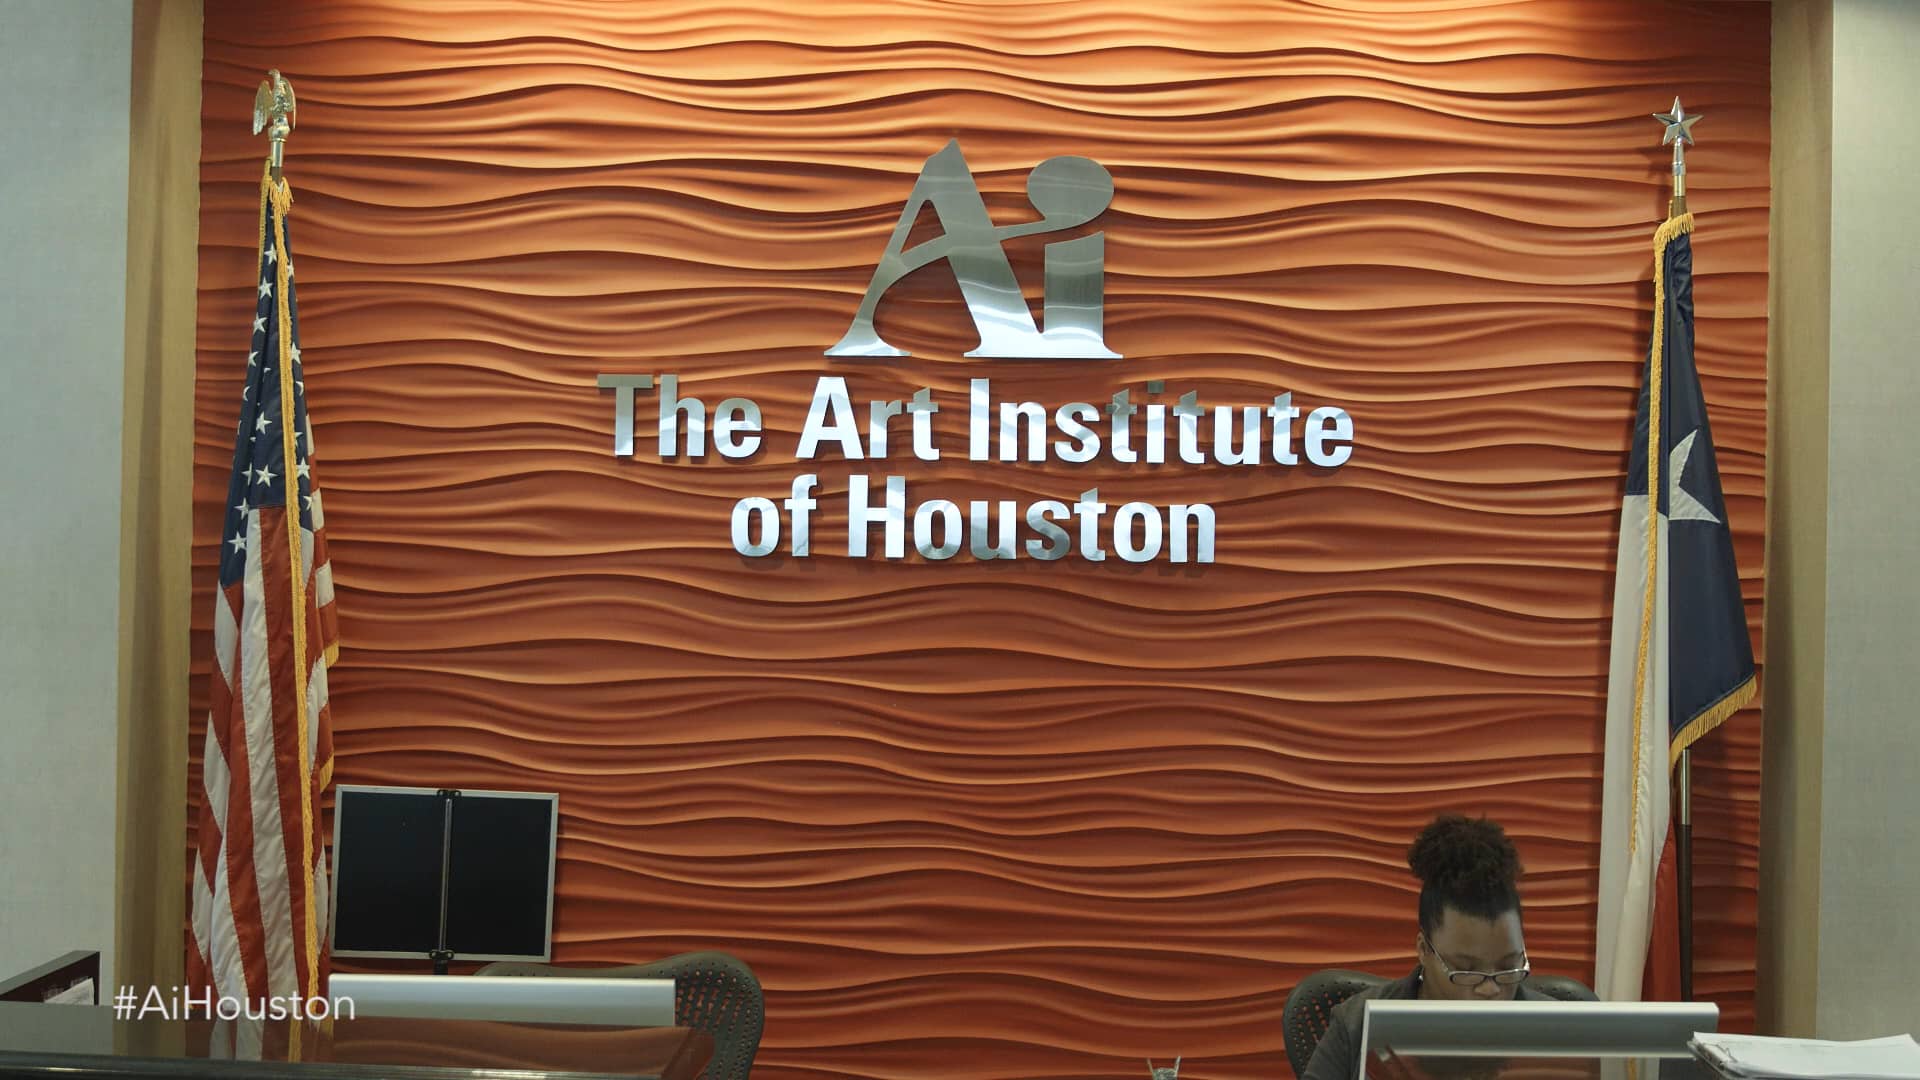 Campus Tour The Art Institute of Houston on Vimeo